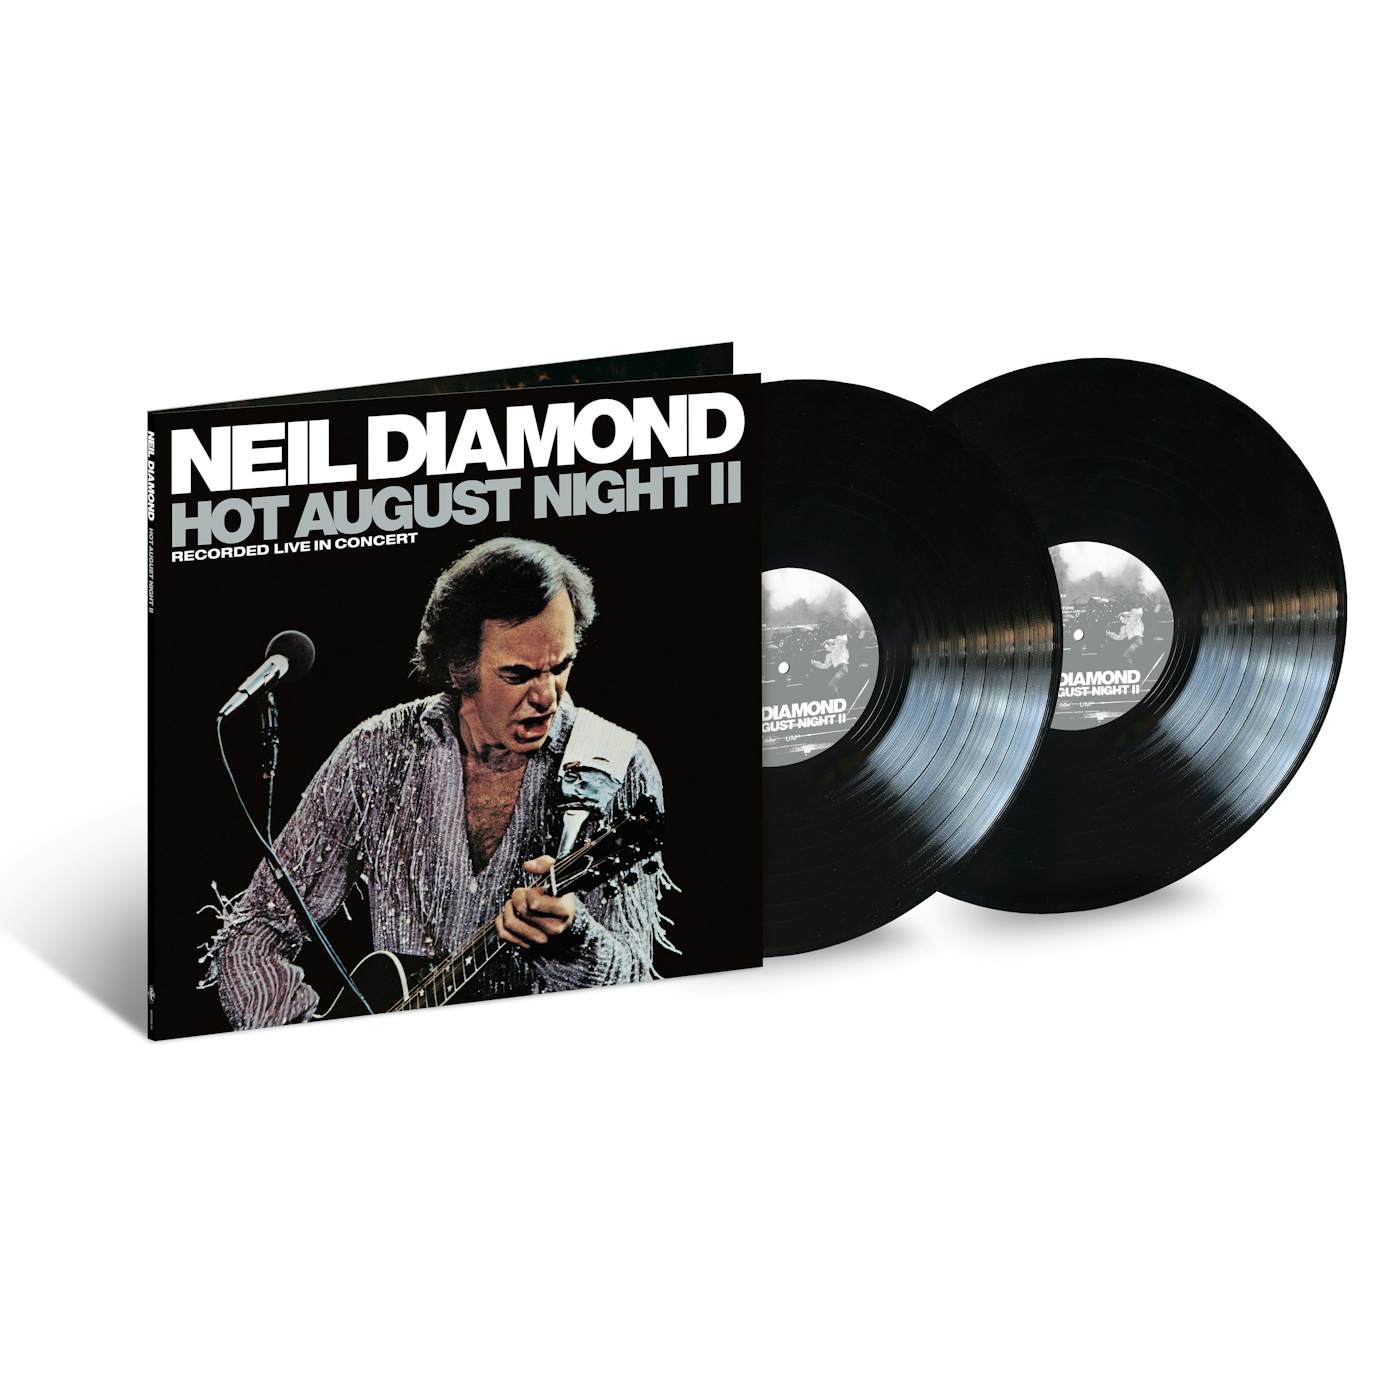 Neil Diamond Hot August Night II 2LP Black Vinyl